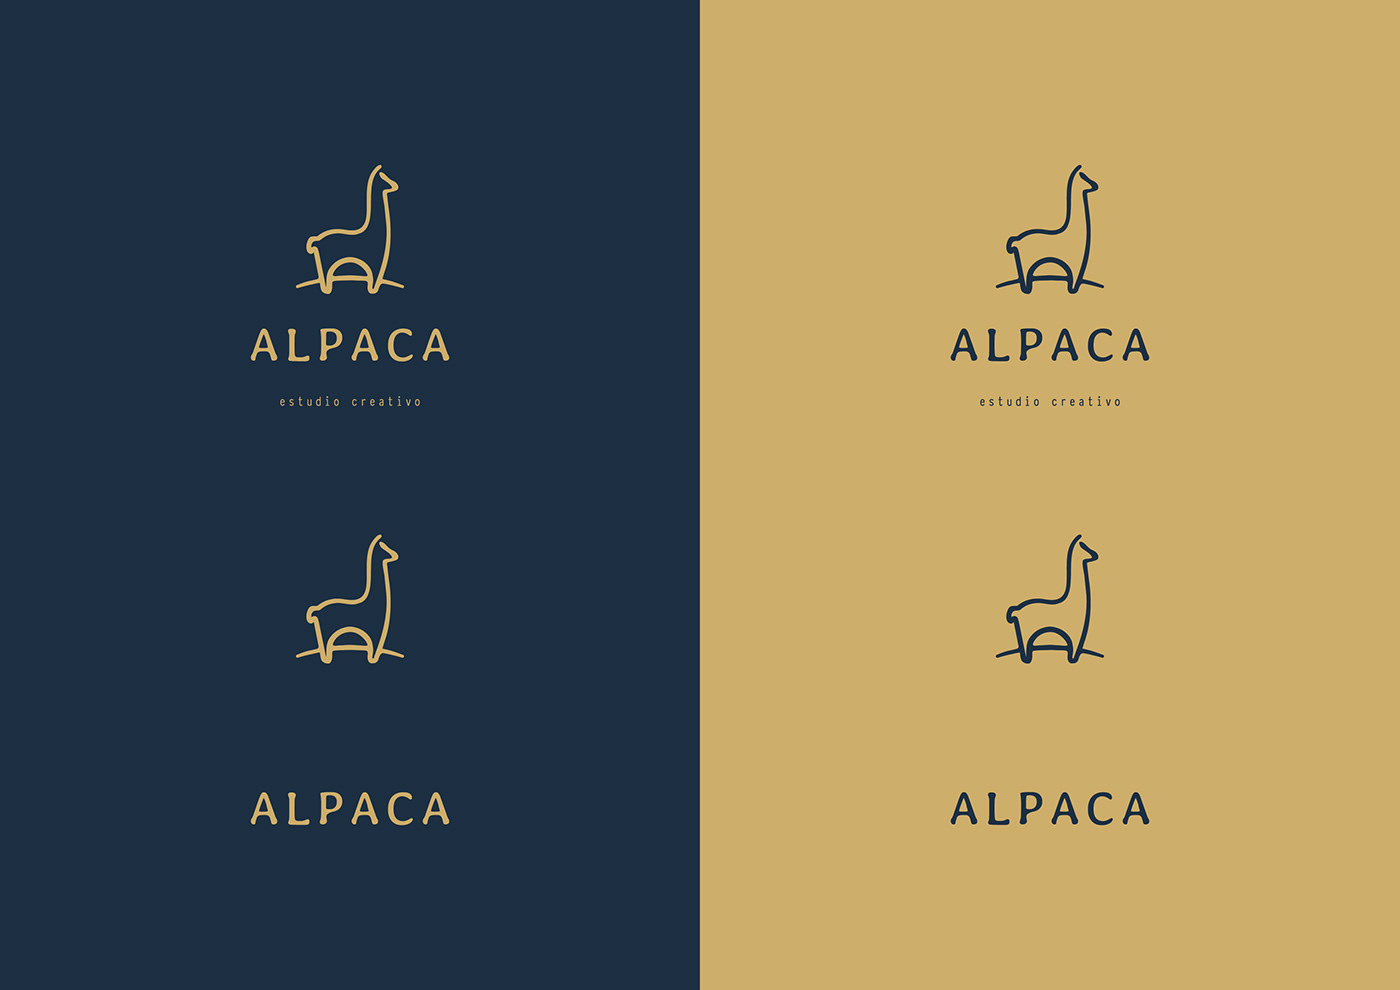 agency alpaca brand content media paraguay social